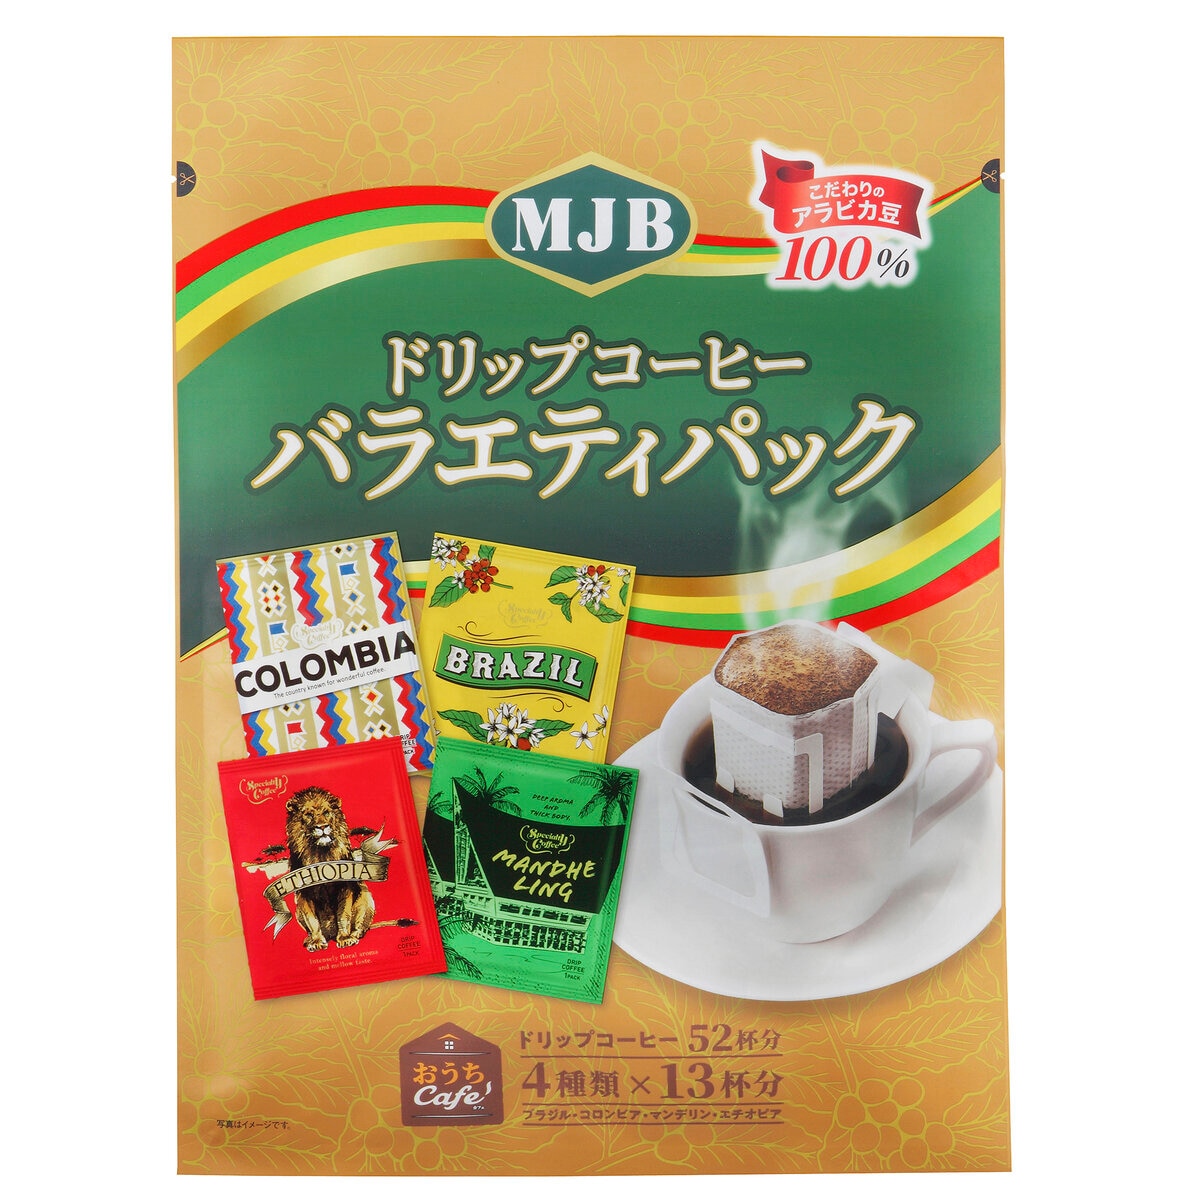 MJB ドリップコーヒー バラエティパック 52パック Costco Japan